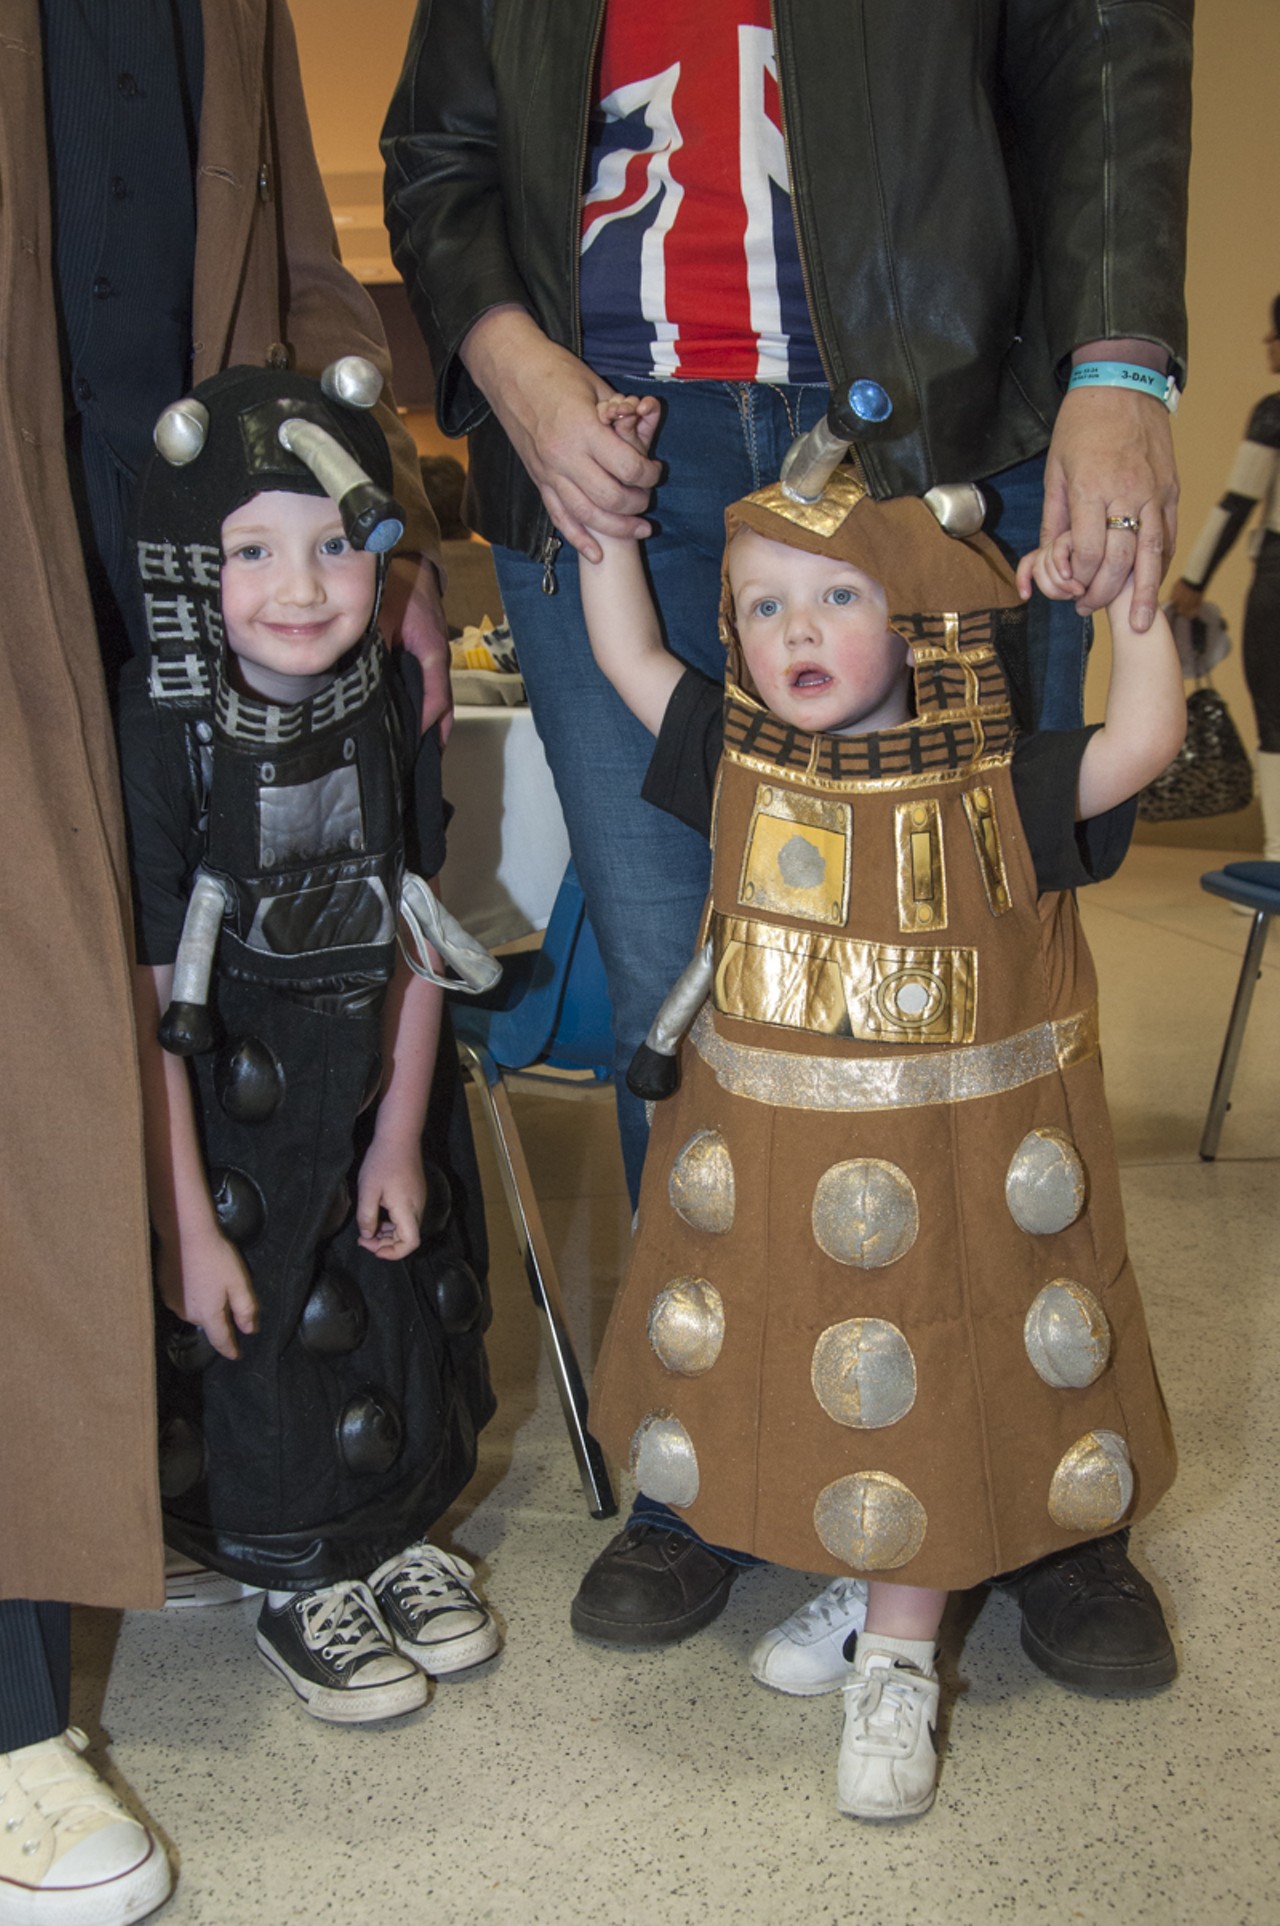 Samuel and Benjamin Meeks, little Daleks from Dr. Who.